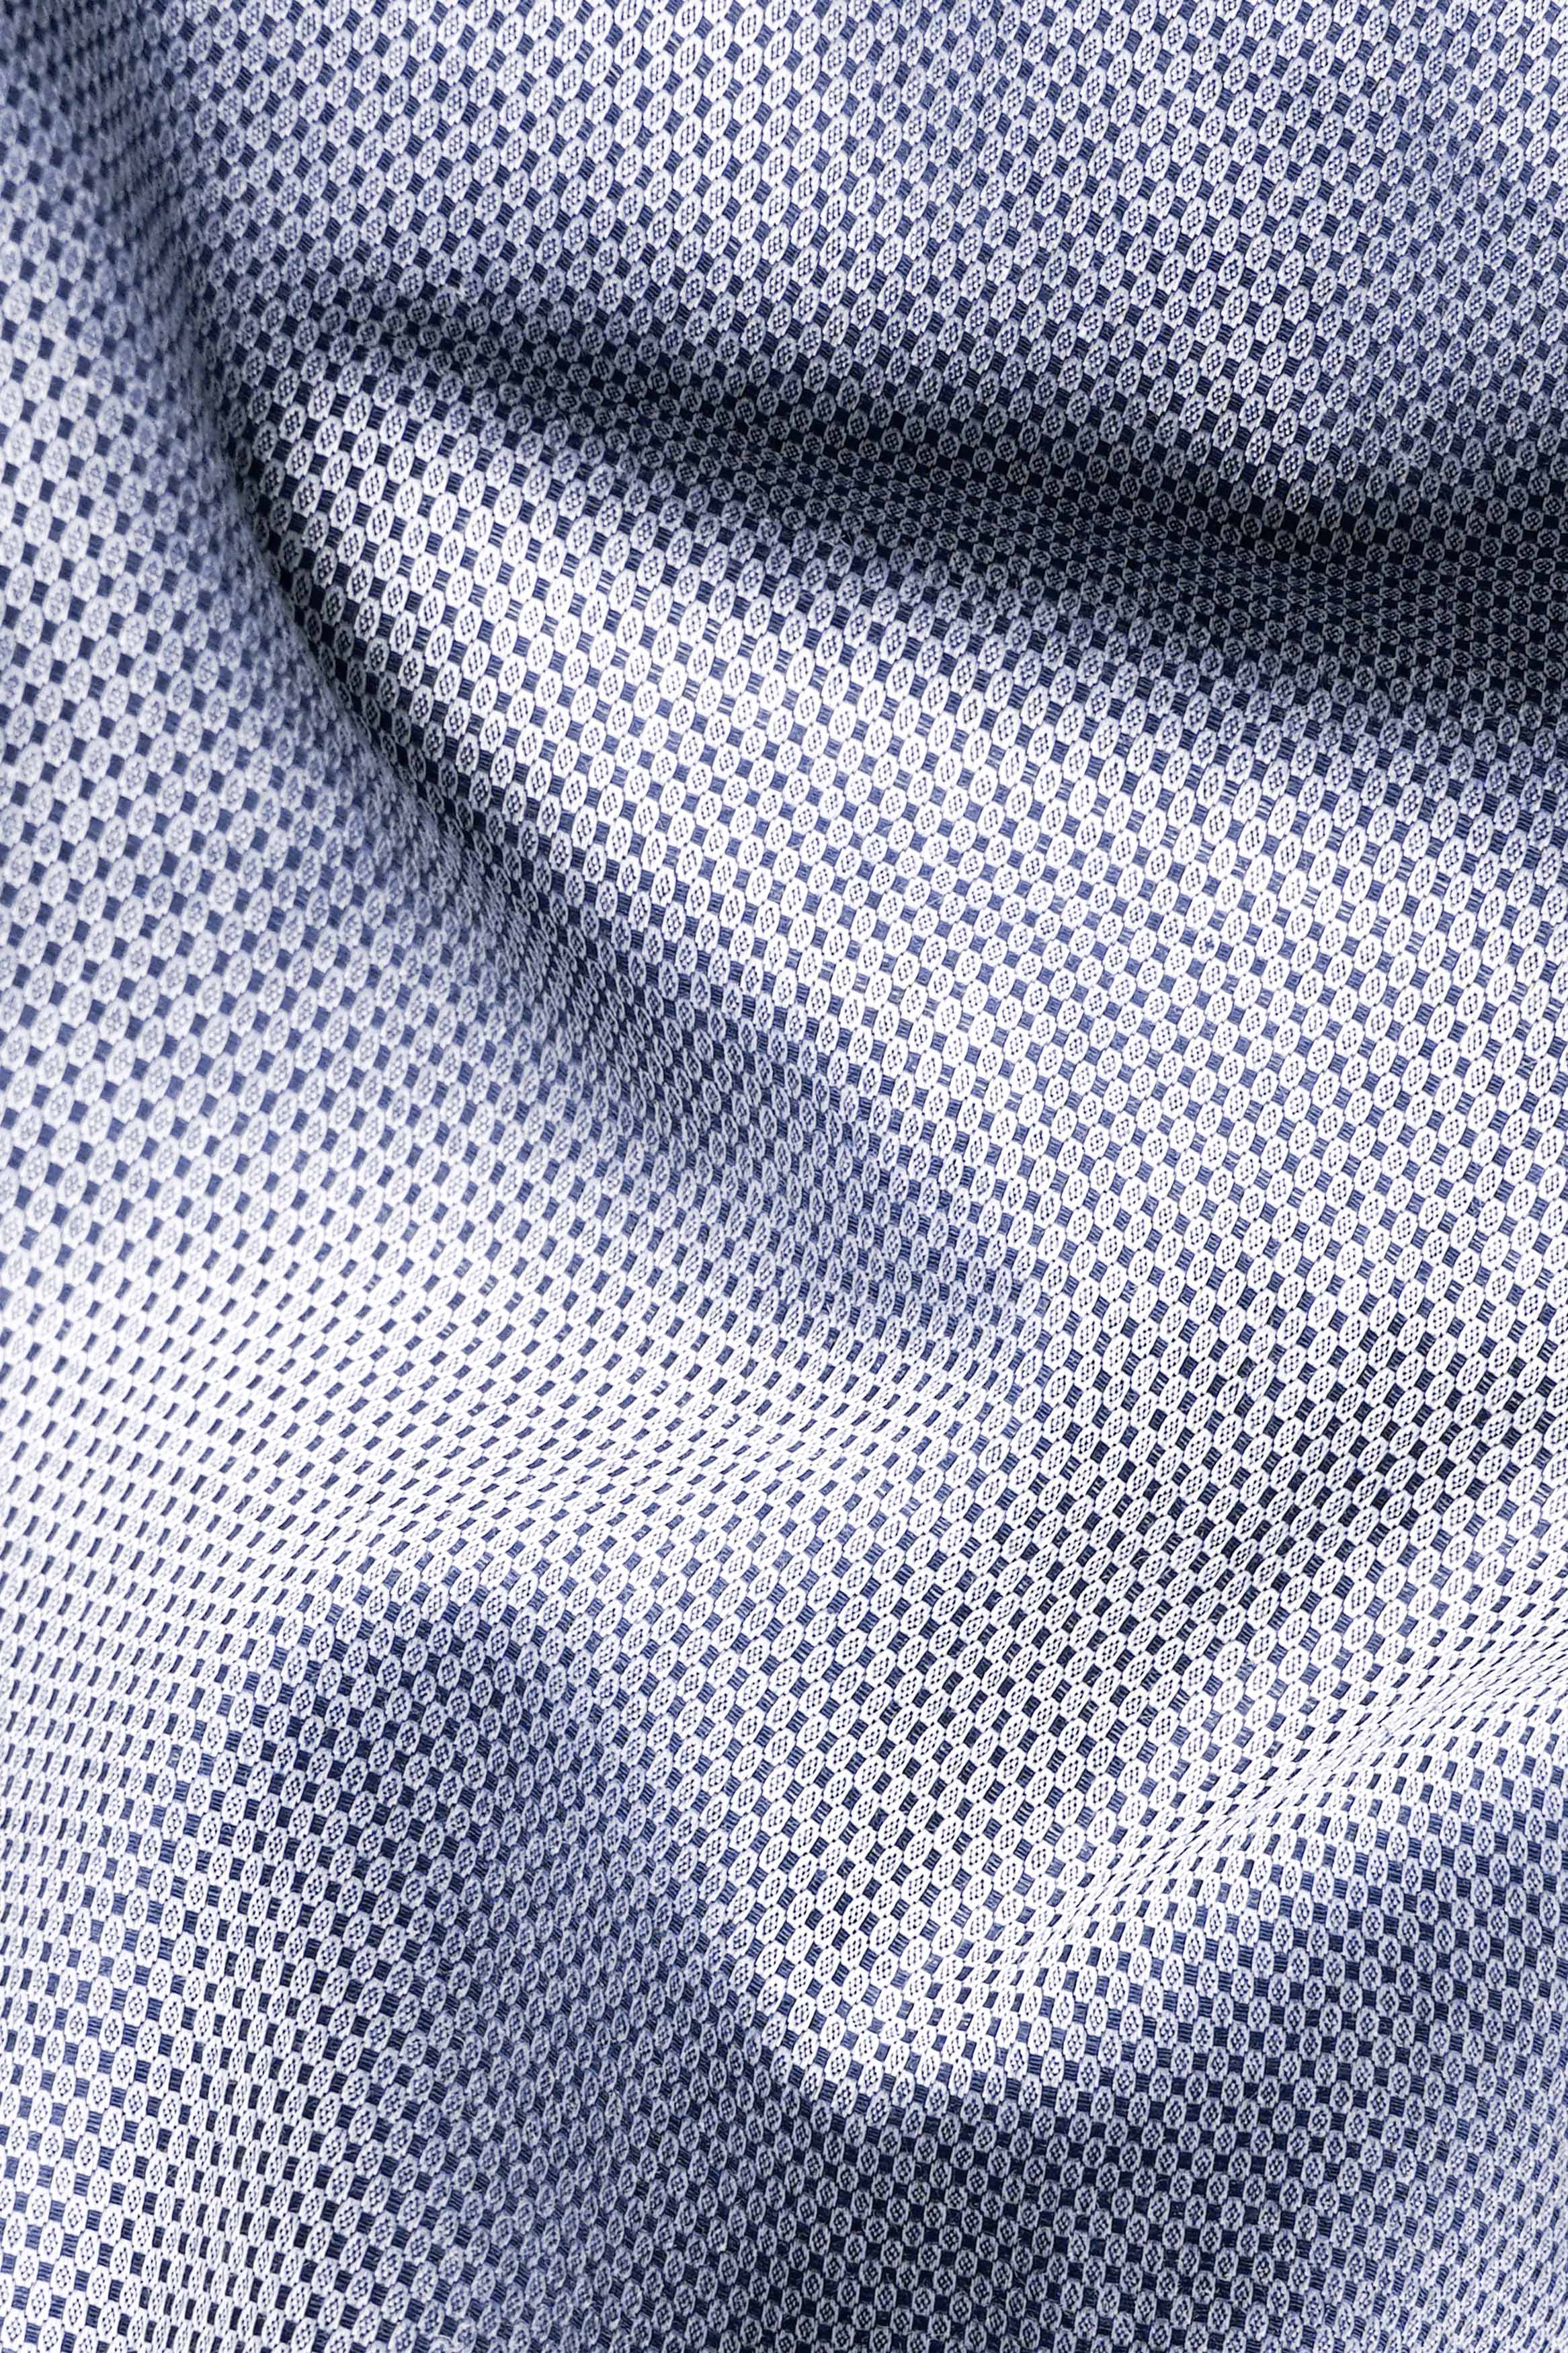 Waikawa Blue and White with Funky Patchwork Dobby Textured Premium Giza Cotton Designer Shirt 6116-CA-E162-38, 6116-CA-E162-H-38, 6116-CA-E162-39, 6116-CA-E162-H-39, 6116-CA-E162-40, 6116-CA-E162-H-40, 6116-CA-E162-42, 6116-CA-E162-H-42, 6116-CA-E162-44, 6116-CA-E162-H-44, 6116-CA-E162-46, 6116-CA-E162-H-46, 6116-CA-E162-48, 6116-CA-E162-H-48, 6116-CA-E162-50, 6116-CA-E162-H-50, 6116-CA-E162-52, 6116-CA-E162-H-52